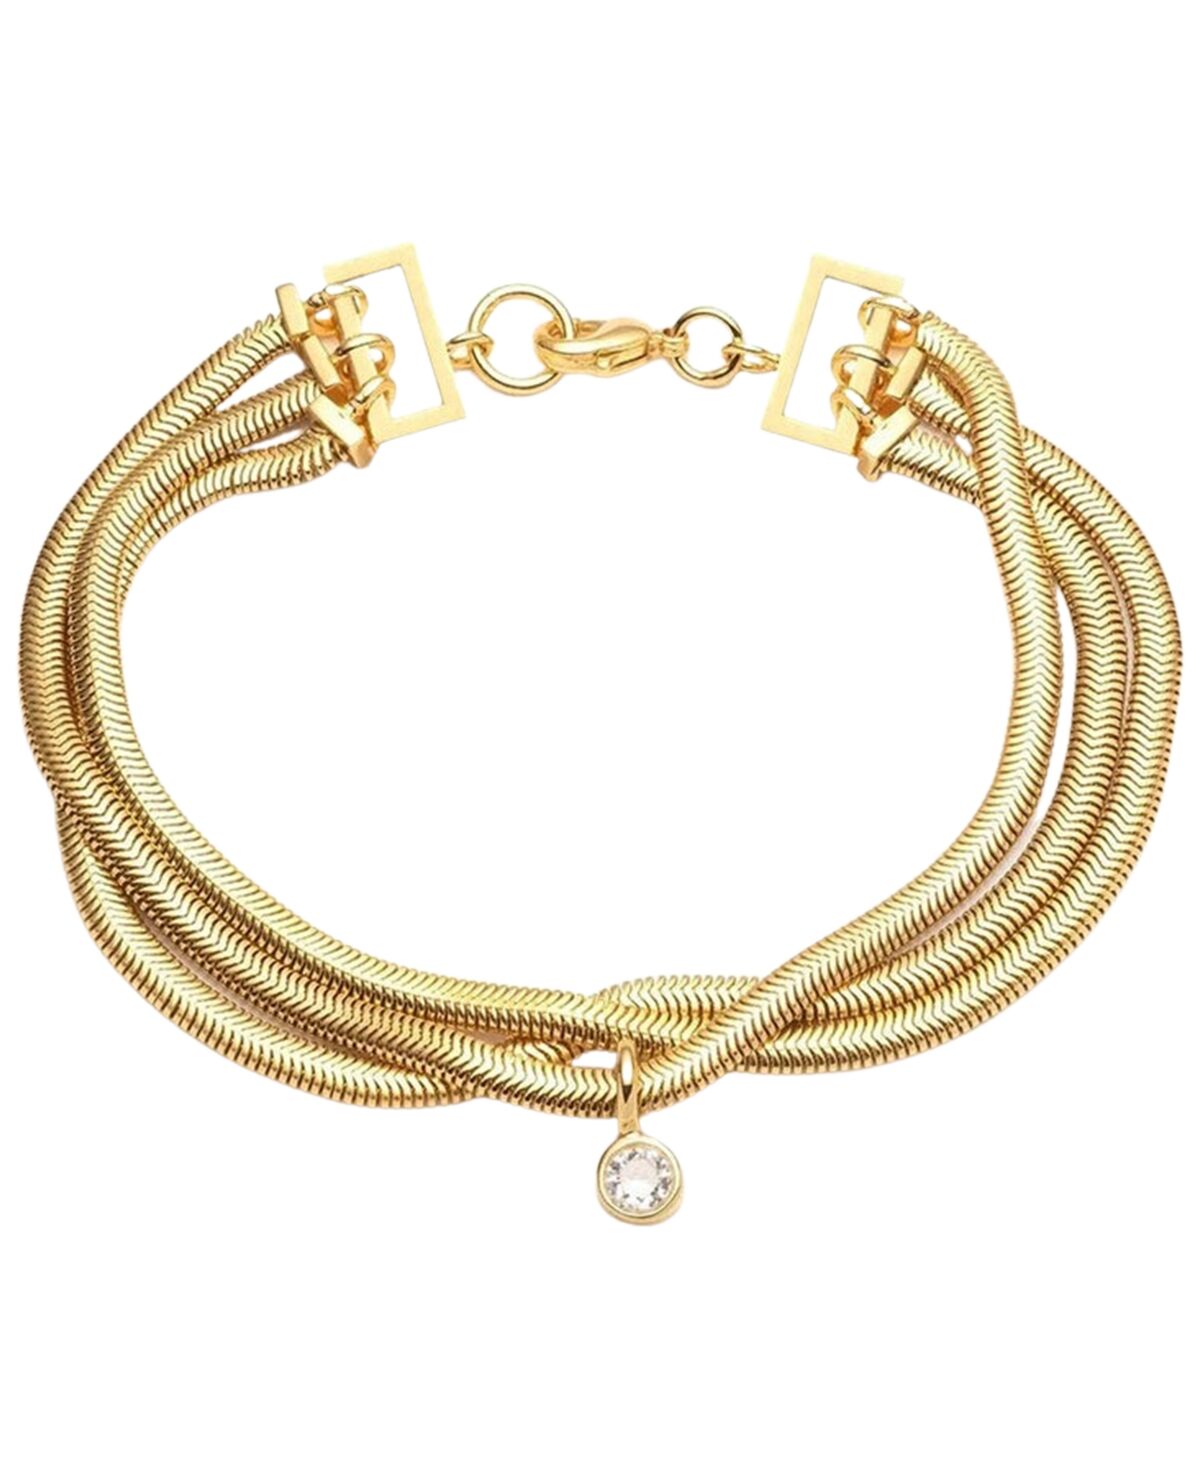 Bonheur Jewelry Lucile Crystal Chain Bracelet - Karat Gold Plated Brass